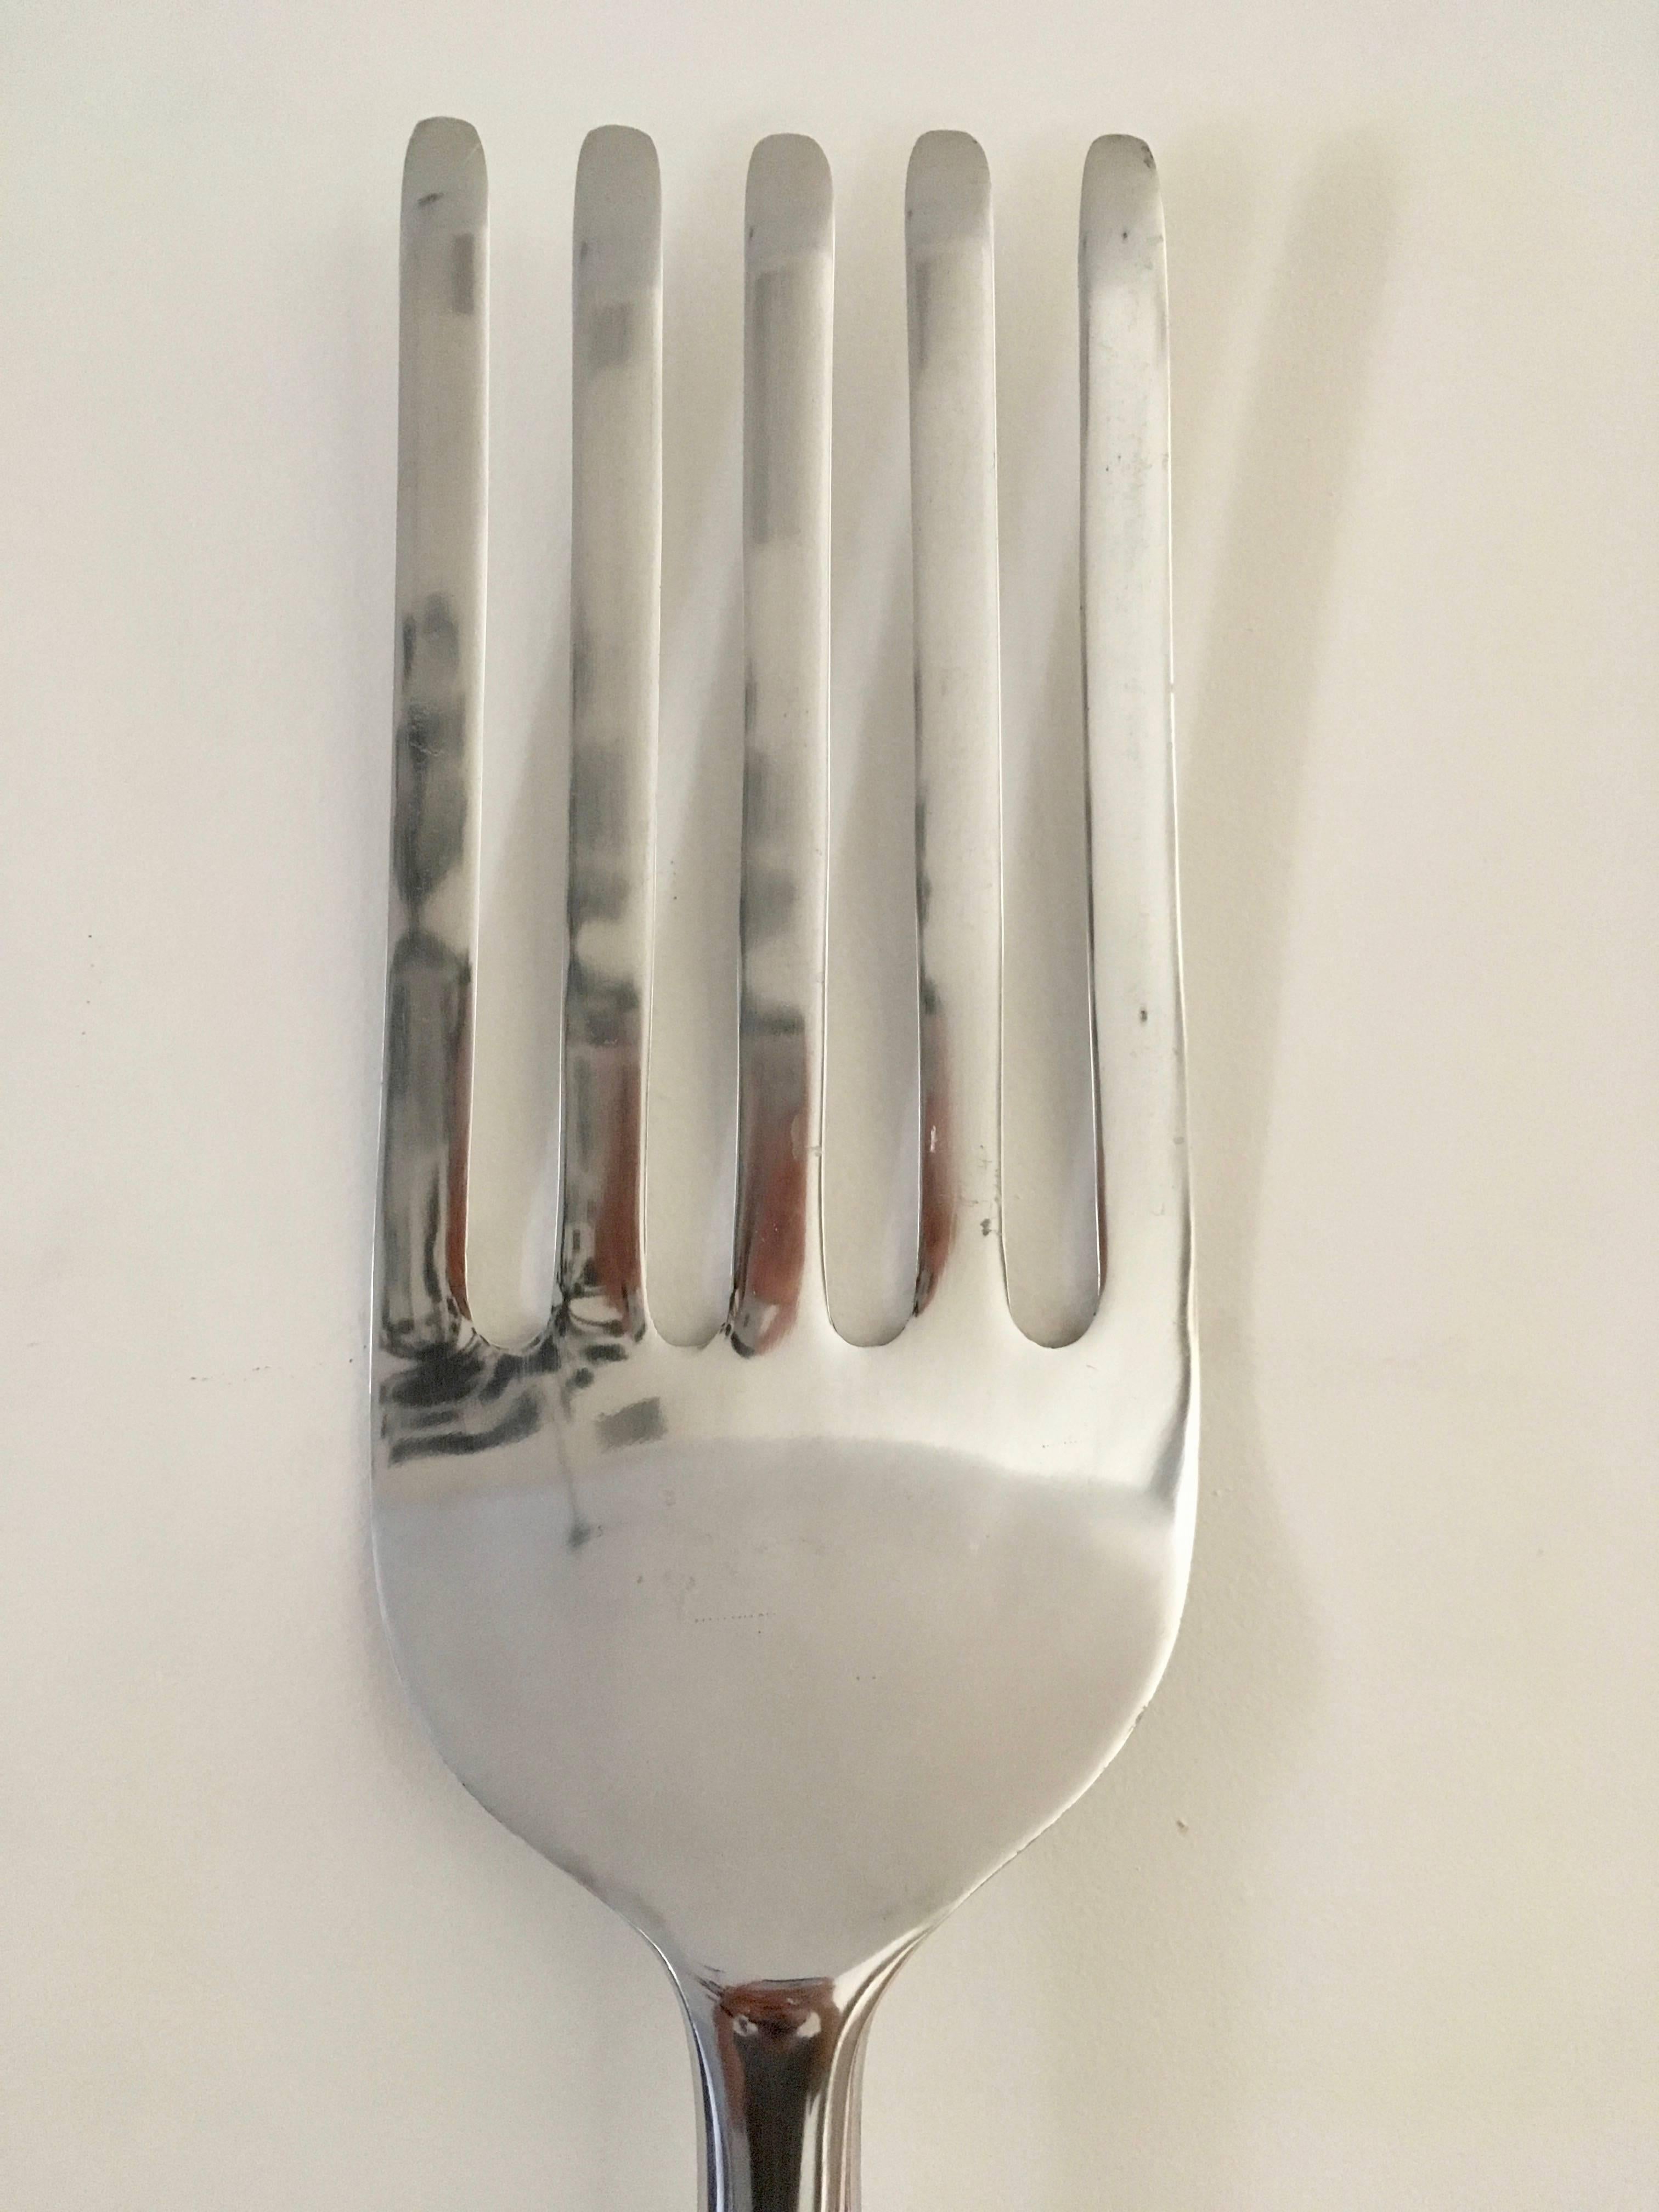 American Massive Oversized Aluminium Fork and Spoon